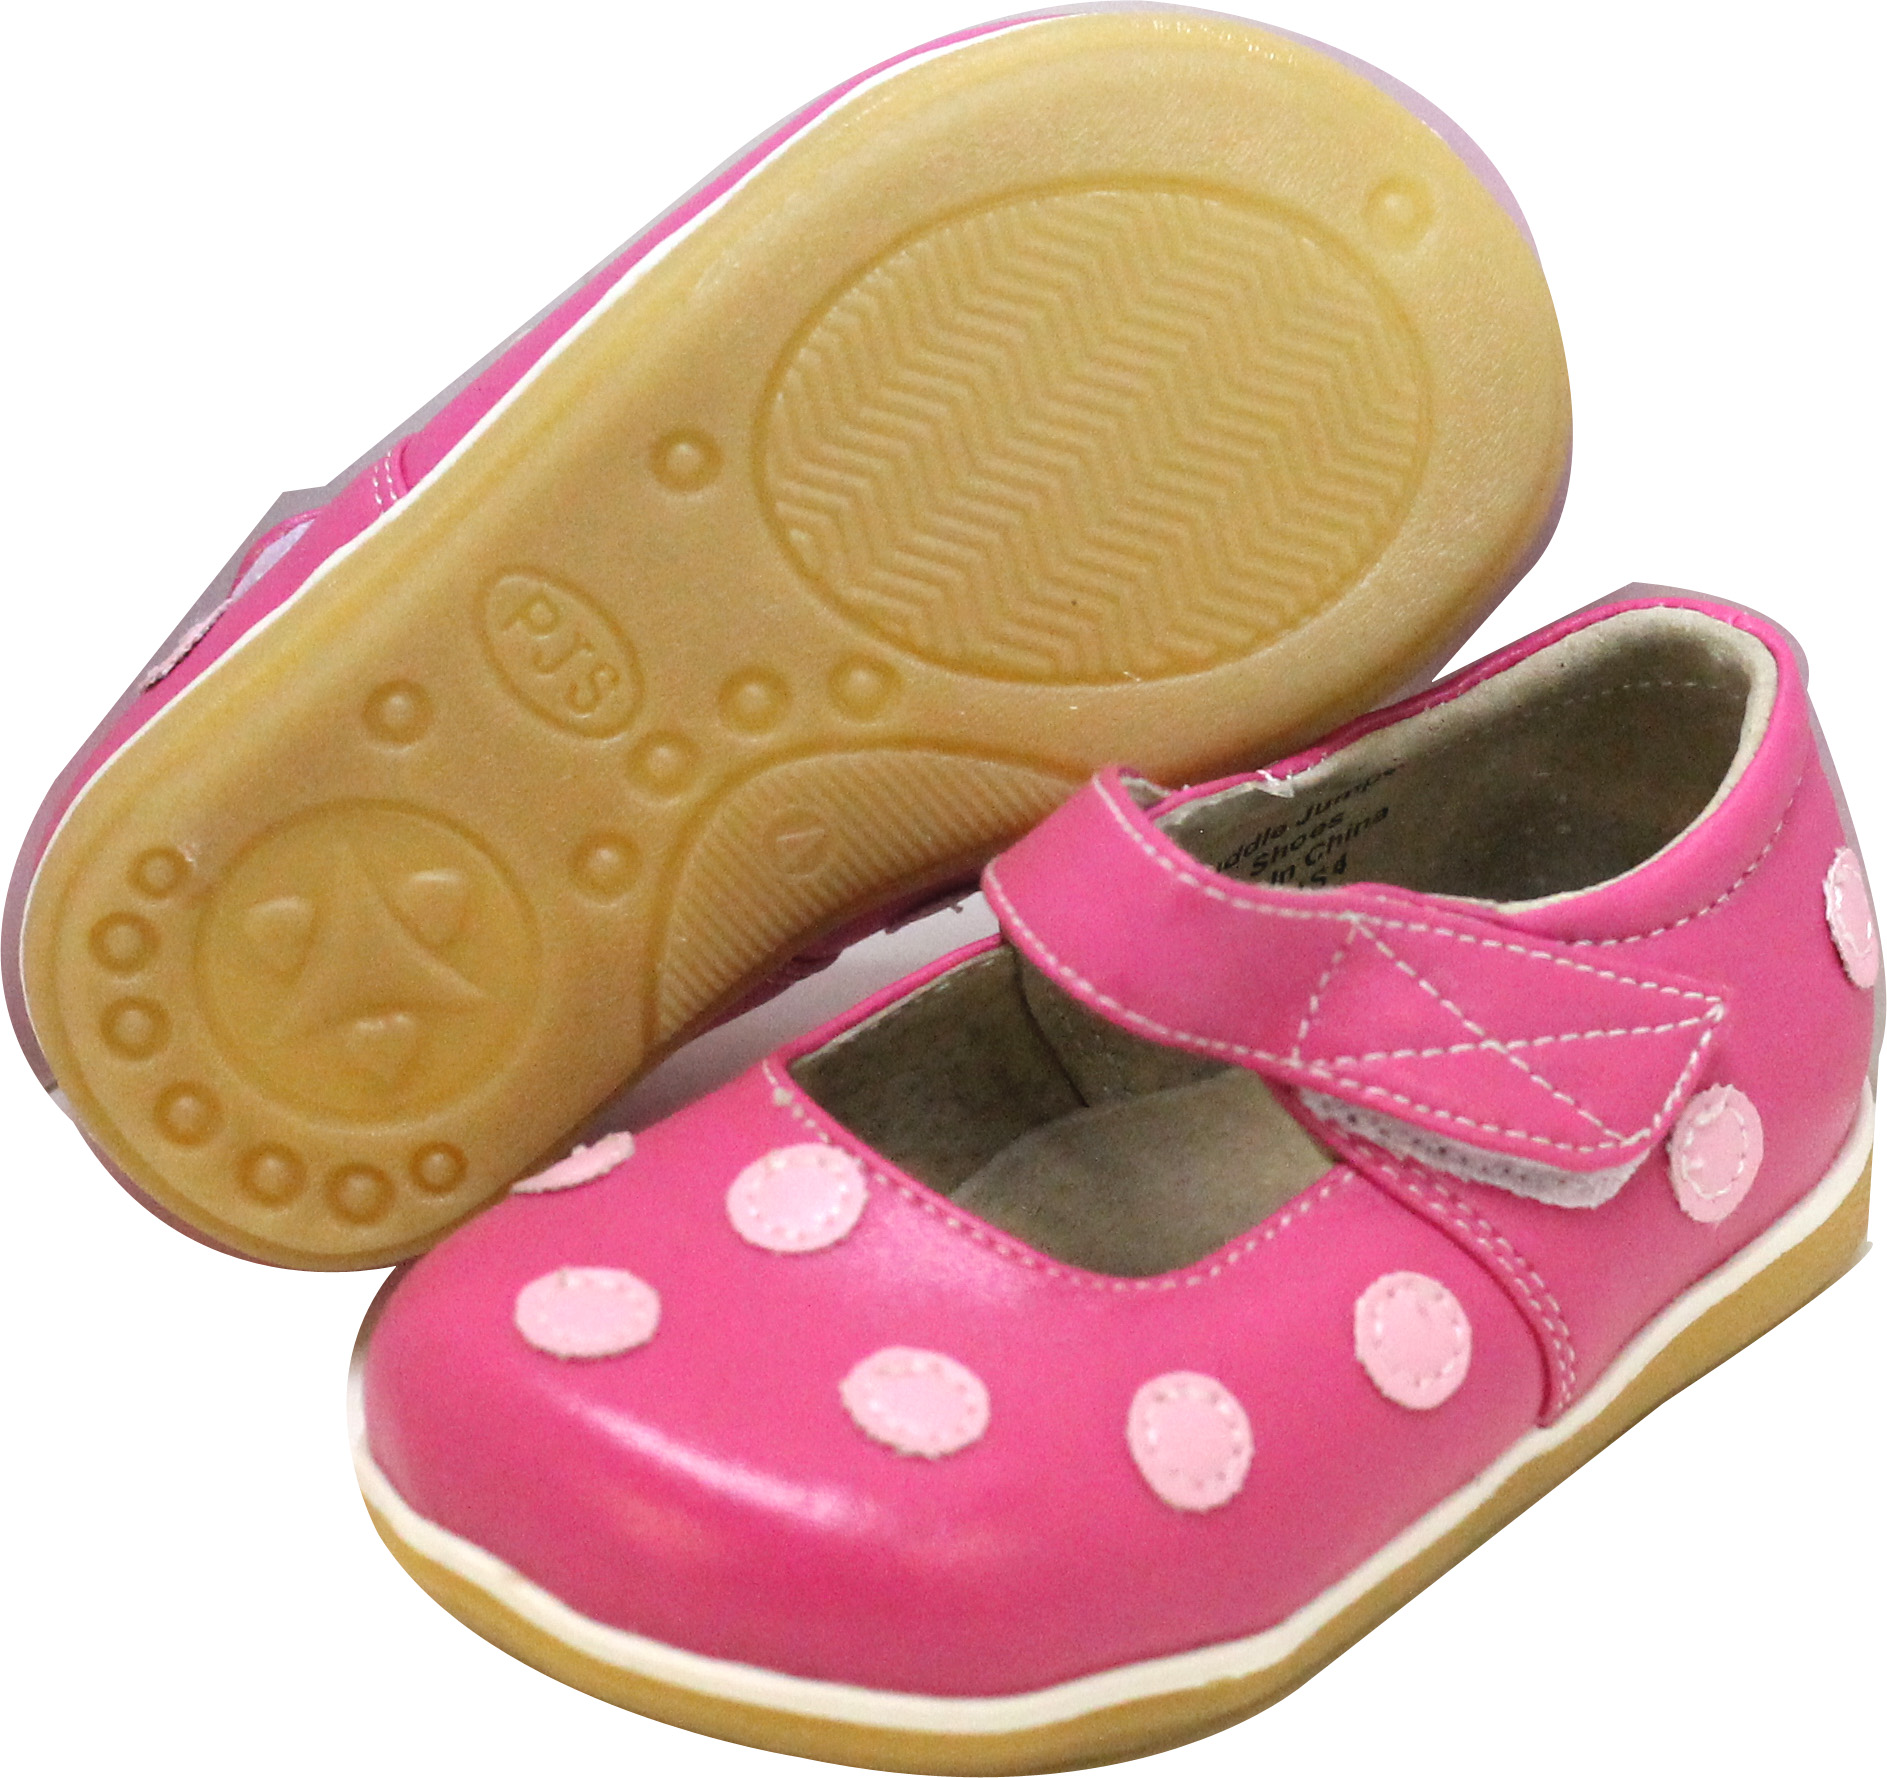 PJ's Puddle Jumpers Mary Jane Flats FUCHSIA HOT PINK Polka Dot Shoes 13  ❤️sj7m38